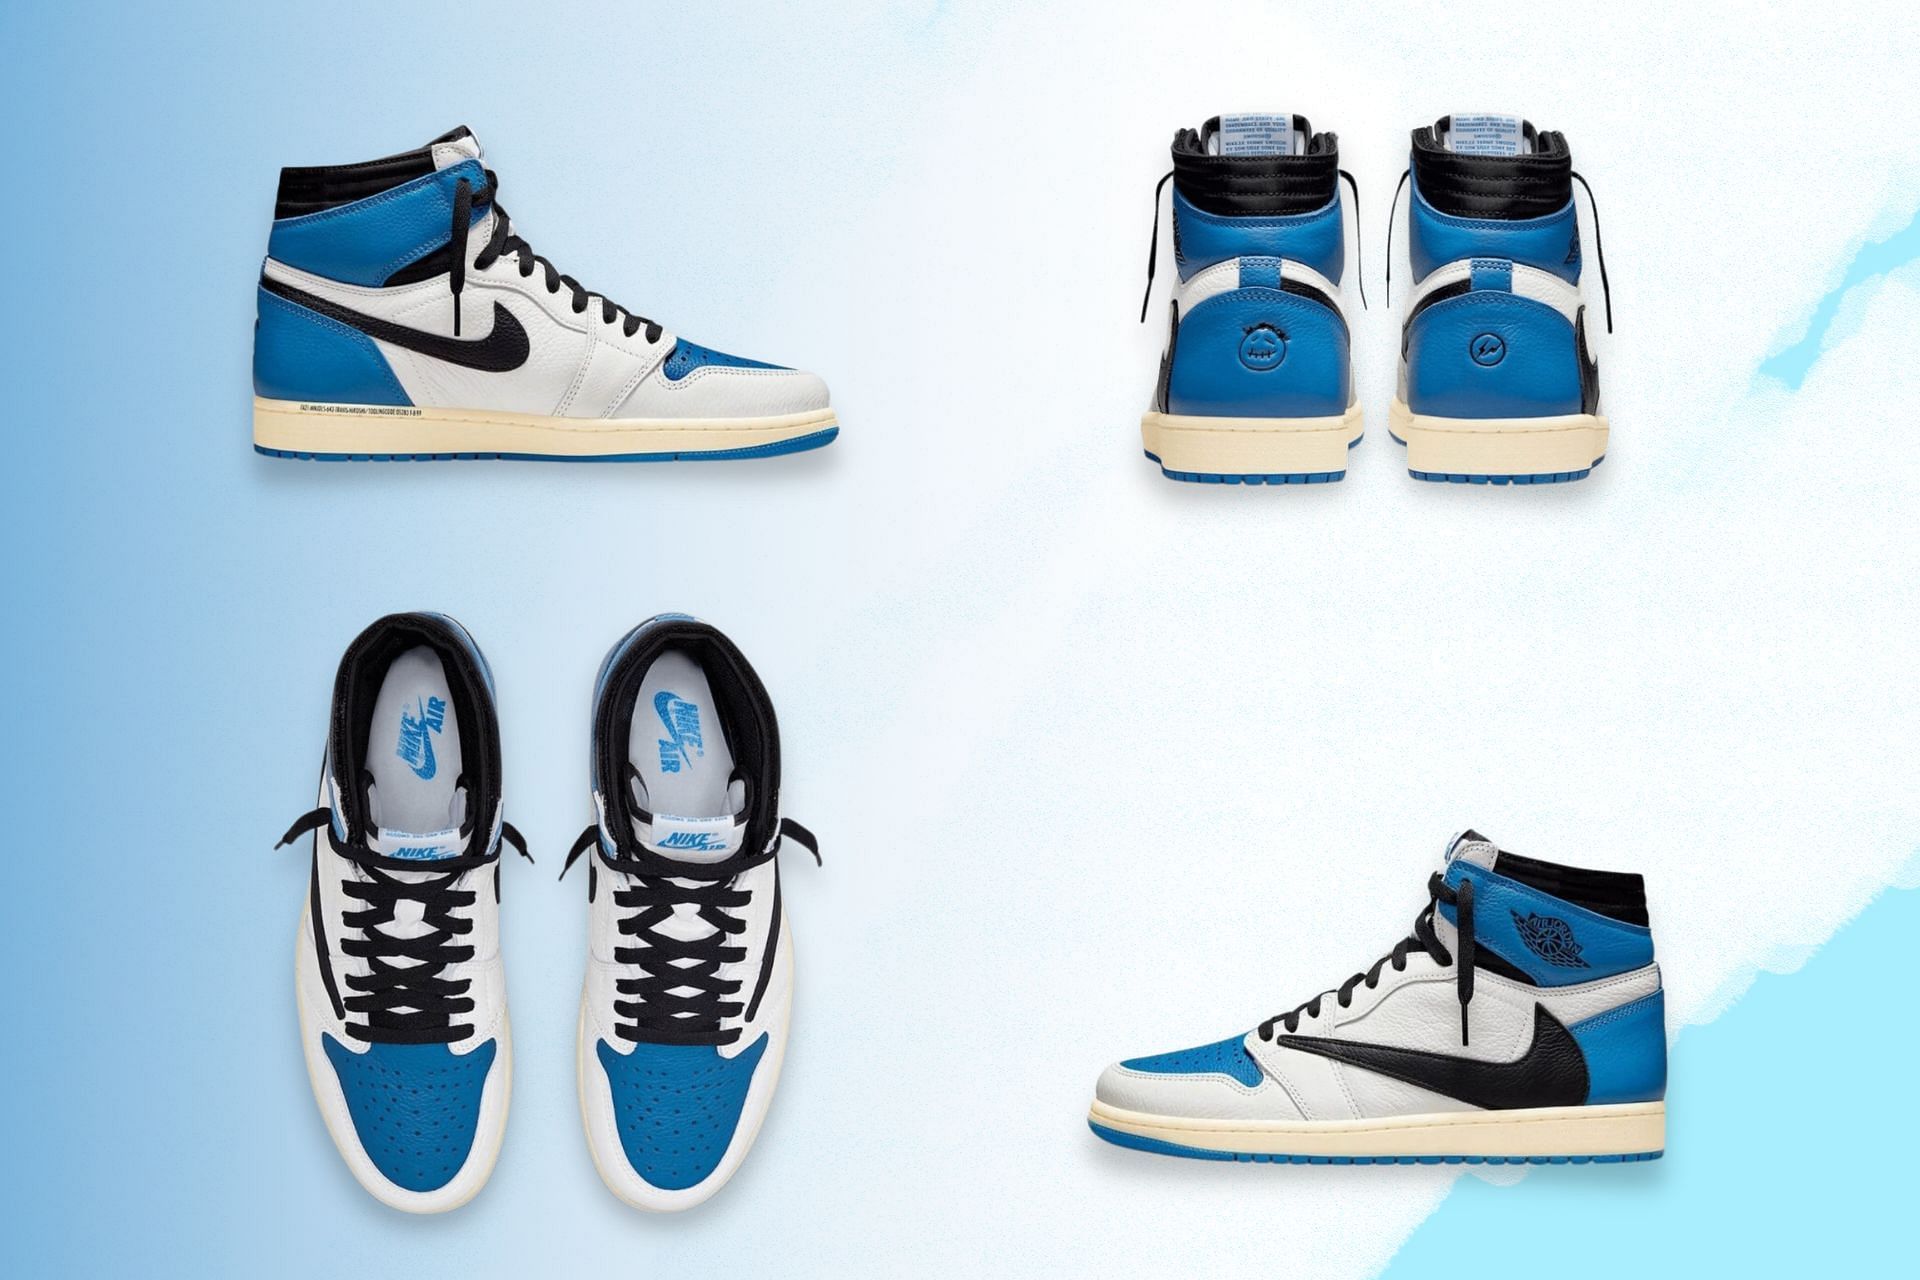 Take a closer look at the popular Air Jordan 1 High shoes (Image via Sportskeeda)